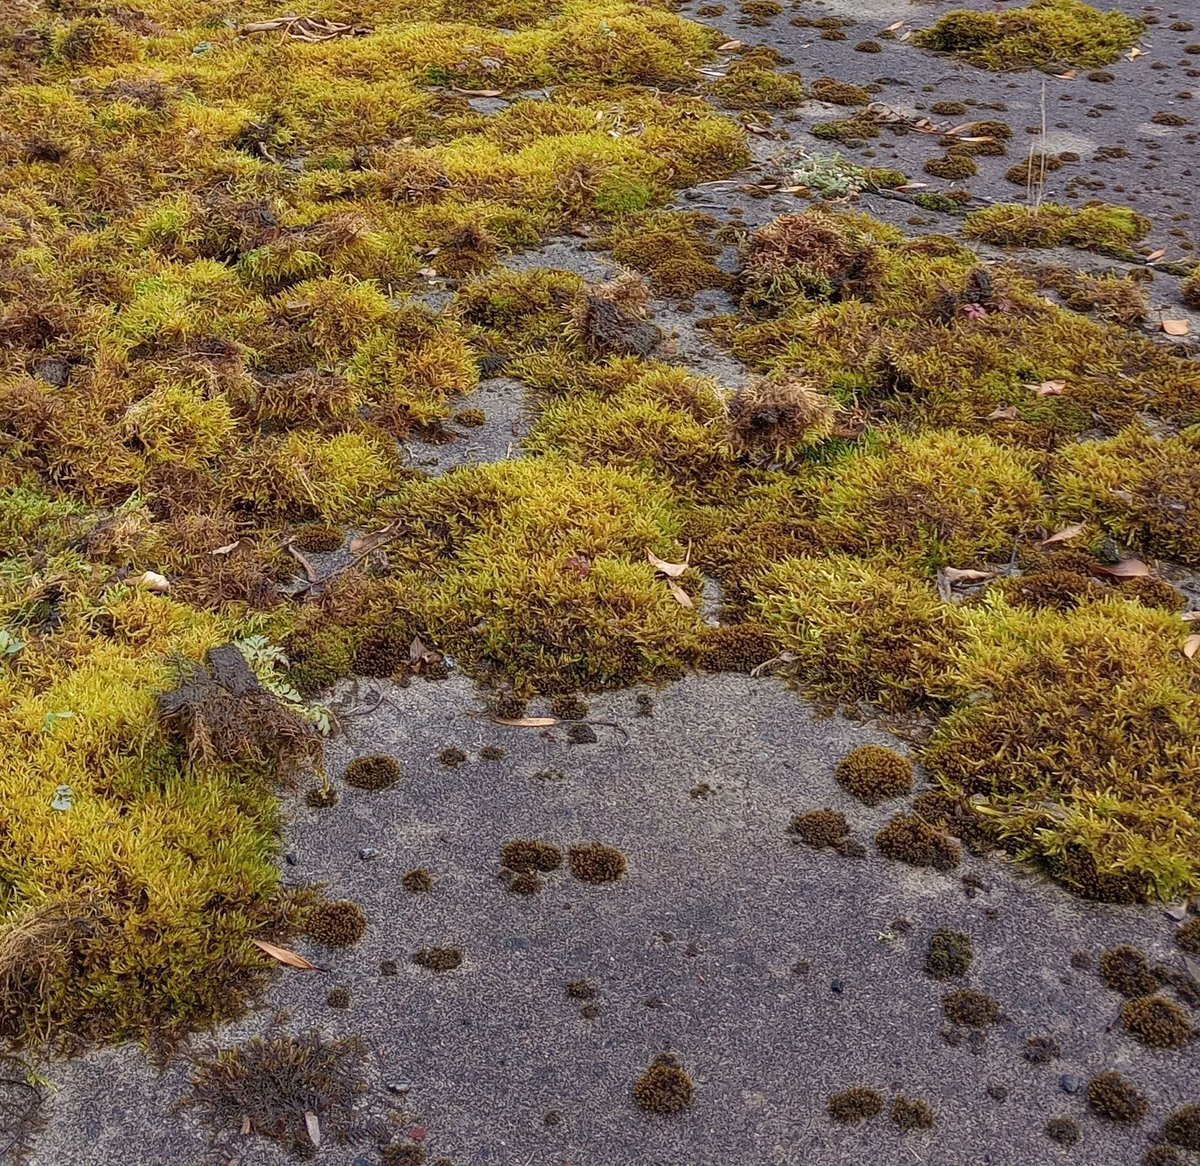 Islands of moss on the path, Japanese garden style #japanesegardens #mossgarden